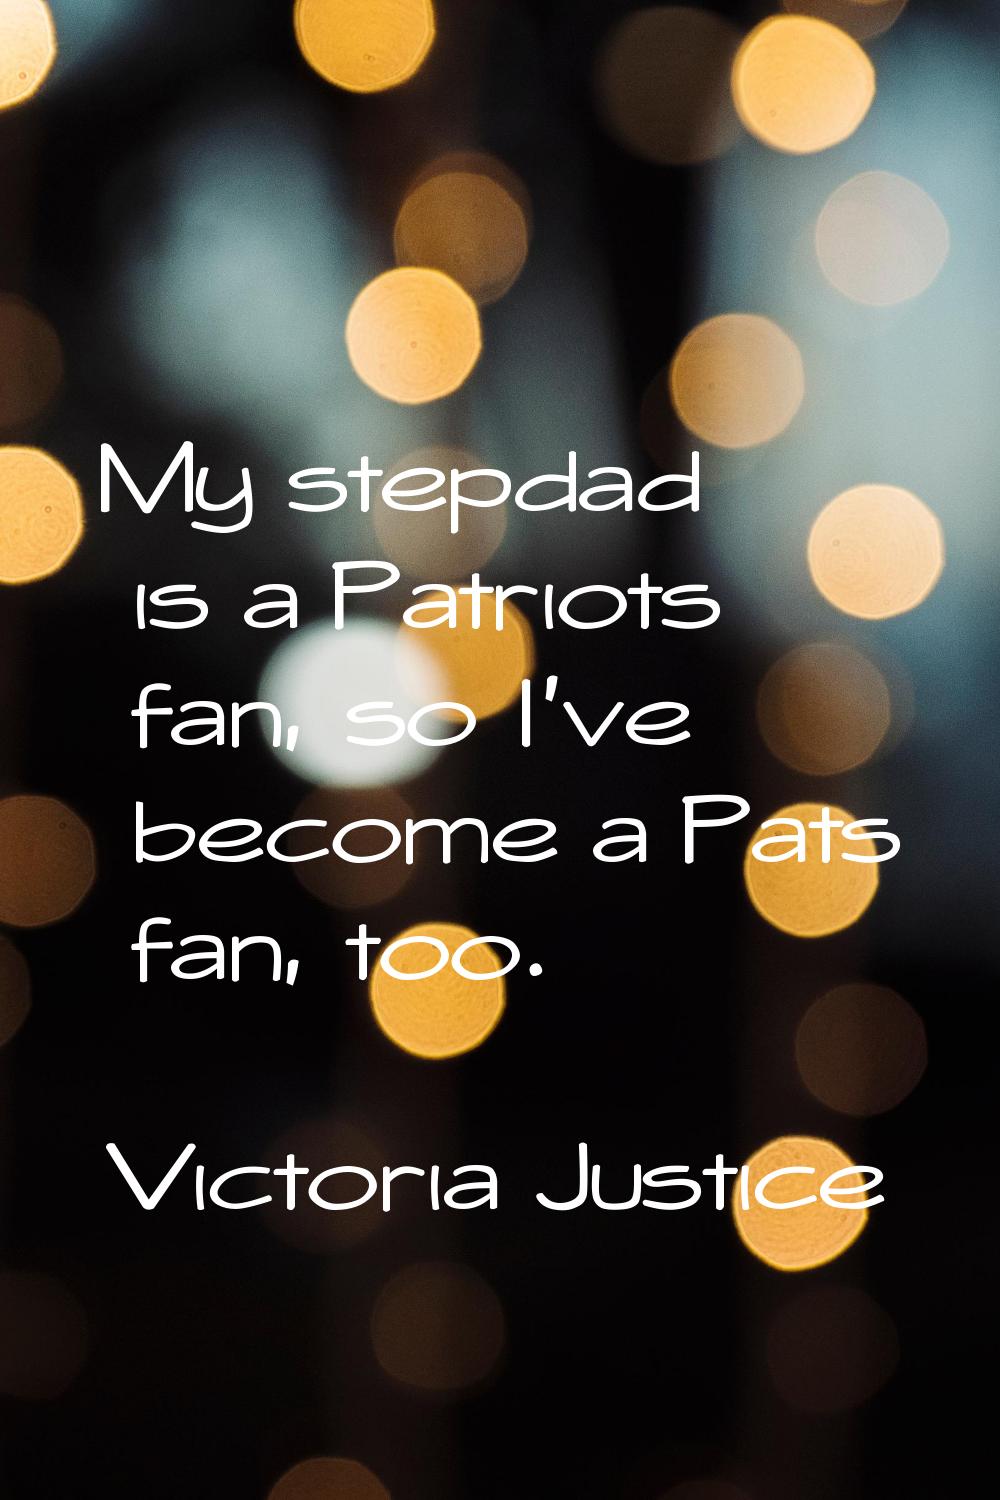 My stepdad is a Patriots fan, so I've become a Pats fan, too.